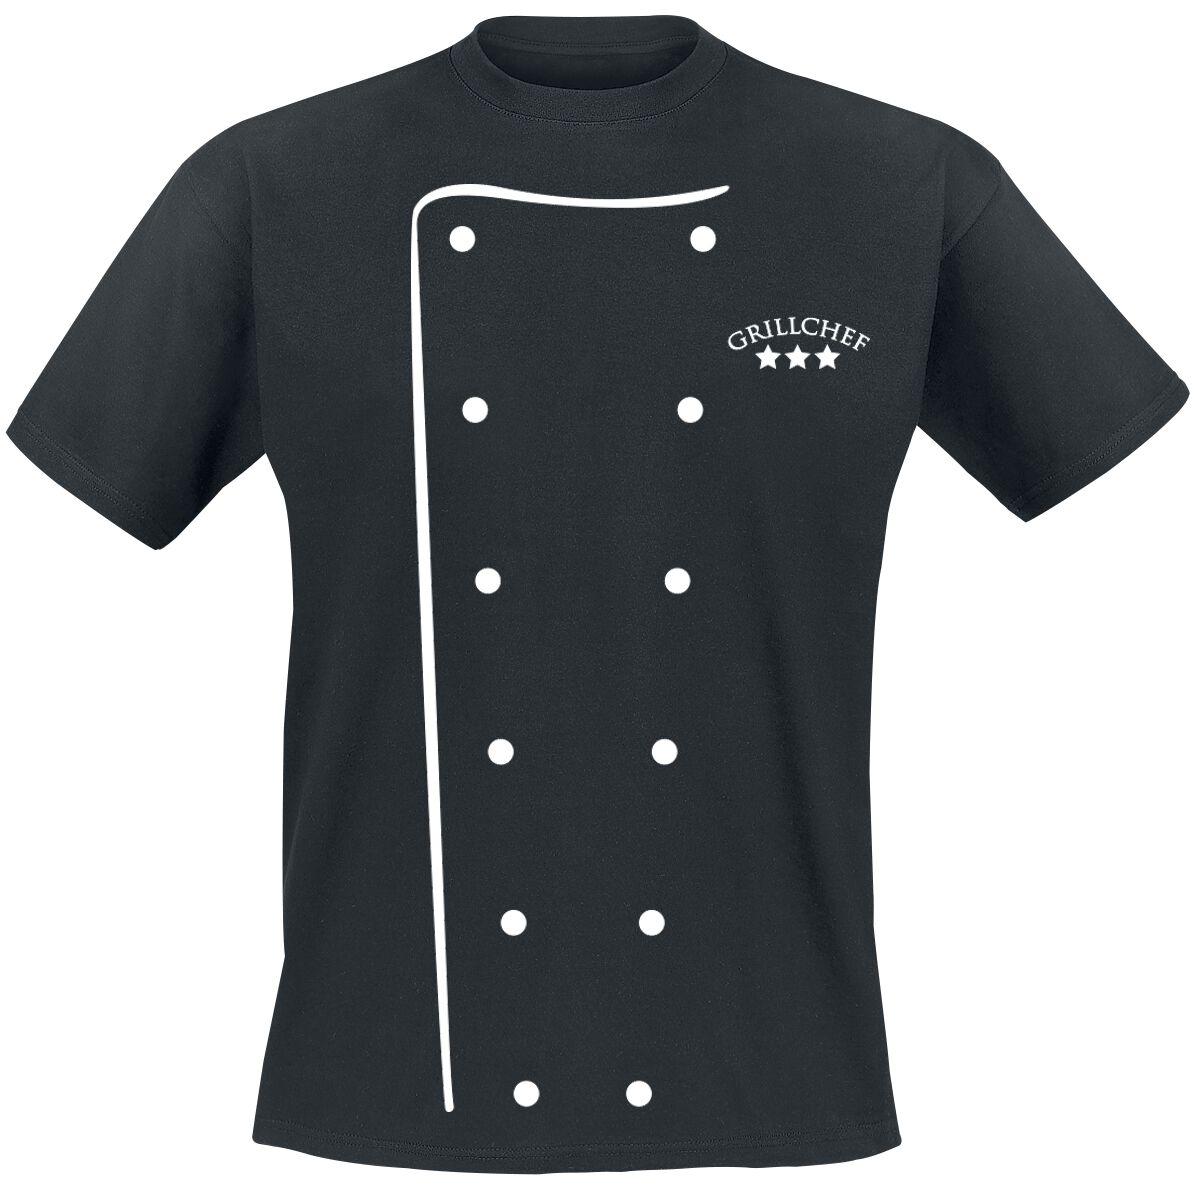 Food Grillchef T-Shirt schwarz in 5XL